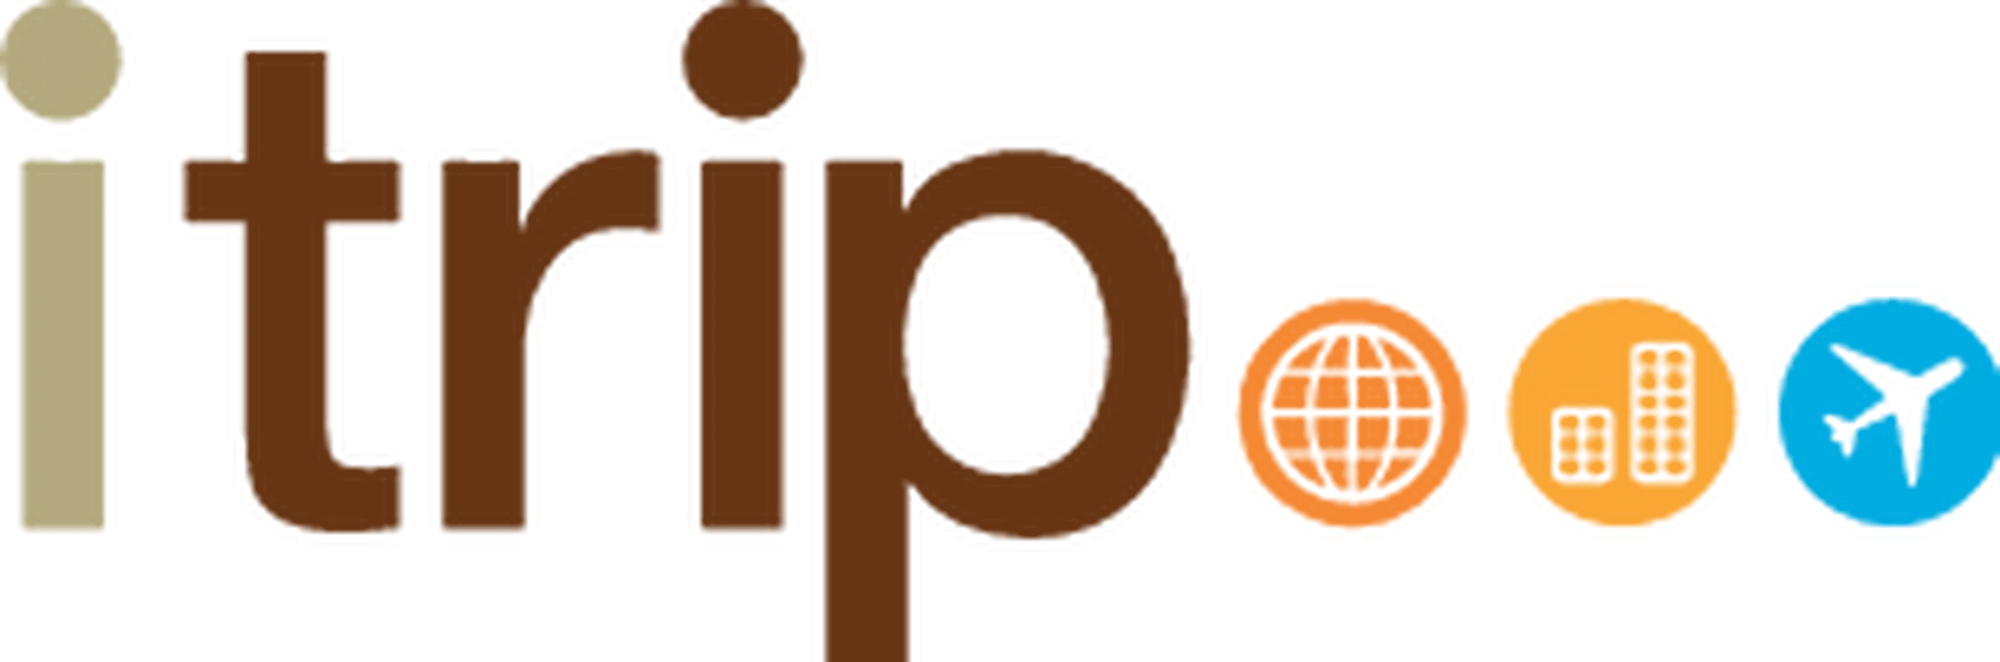 Itrip - Online Reservation System